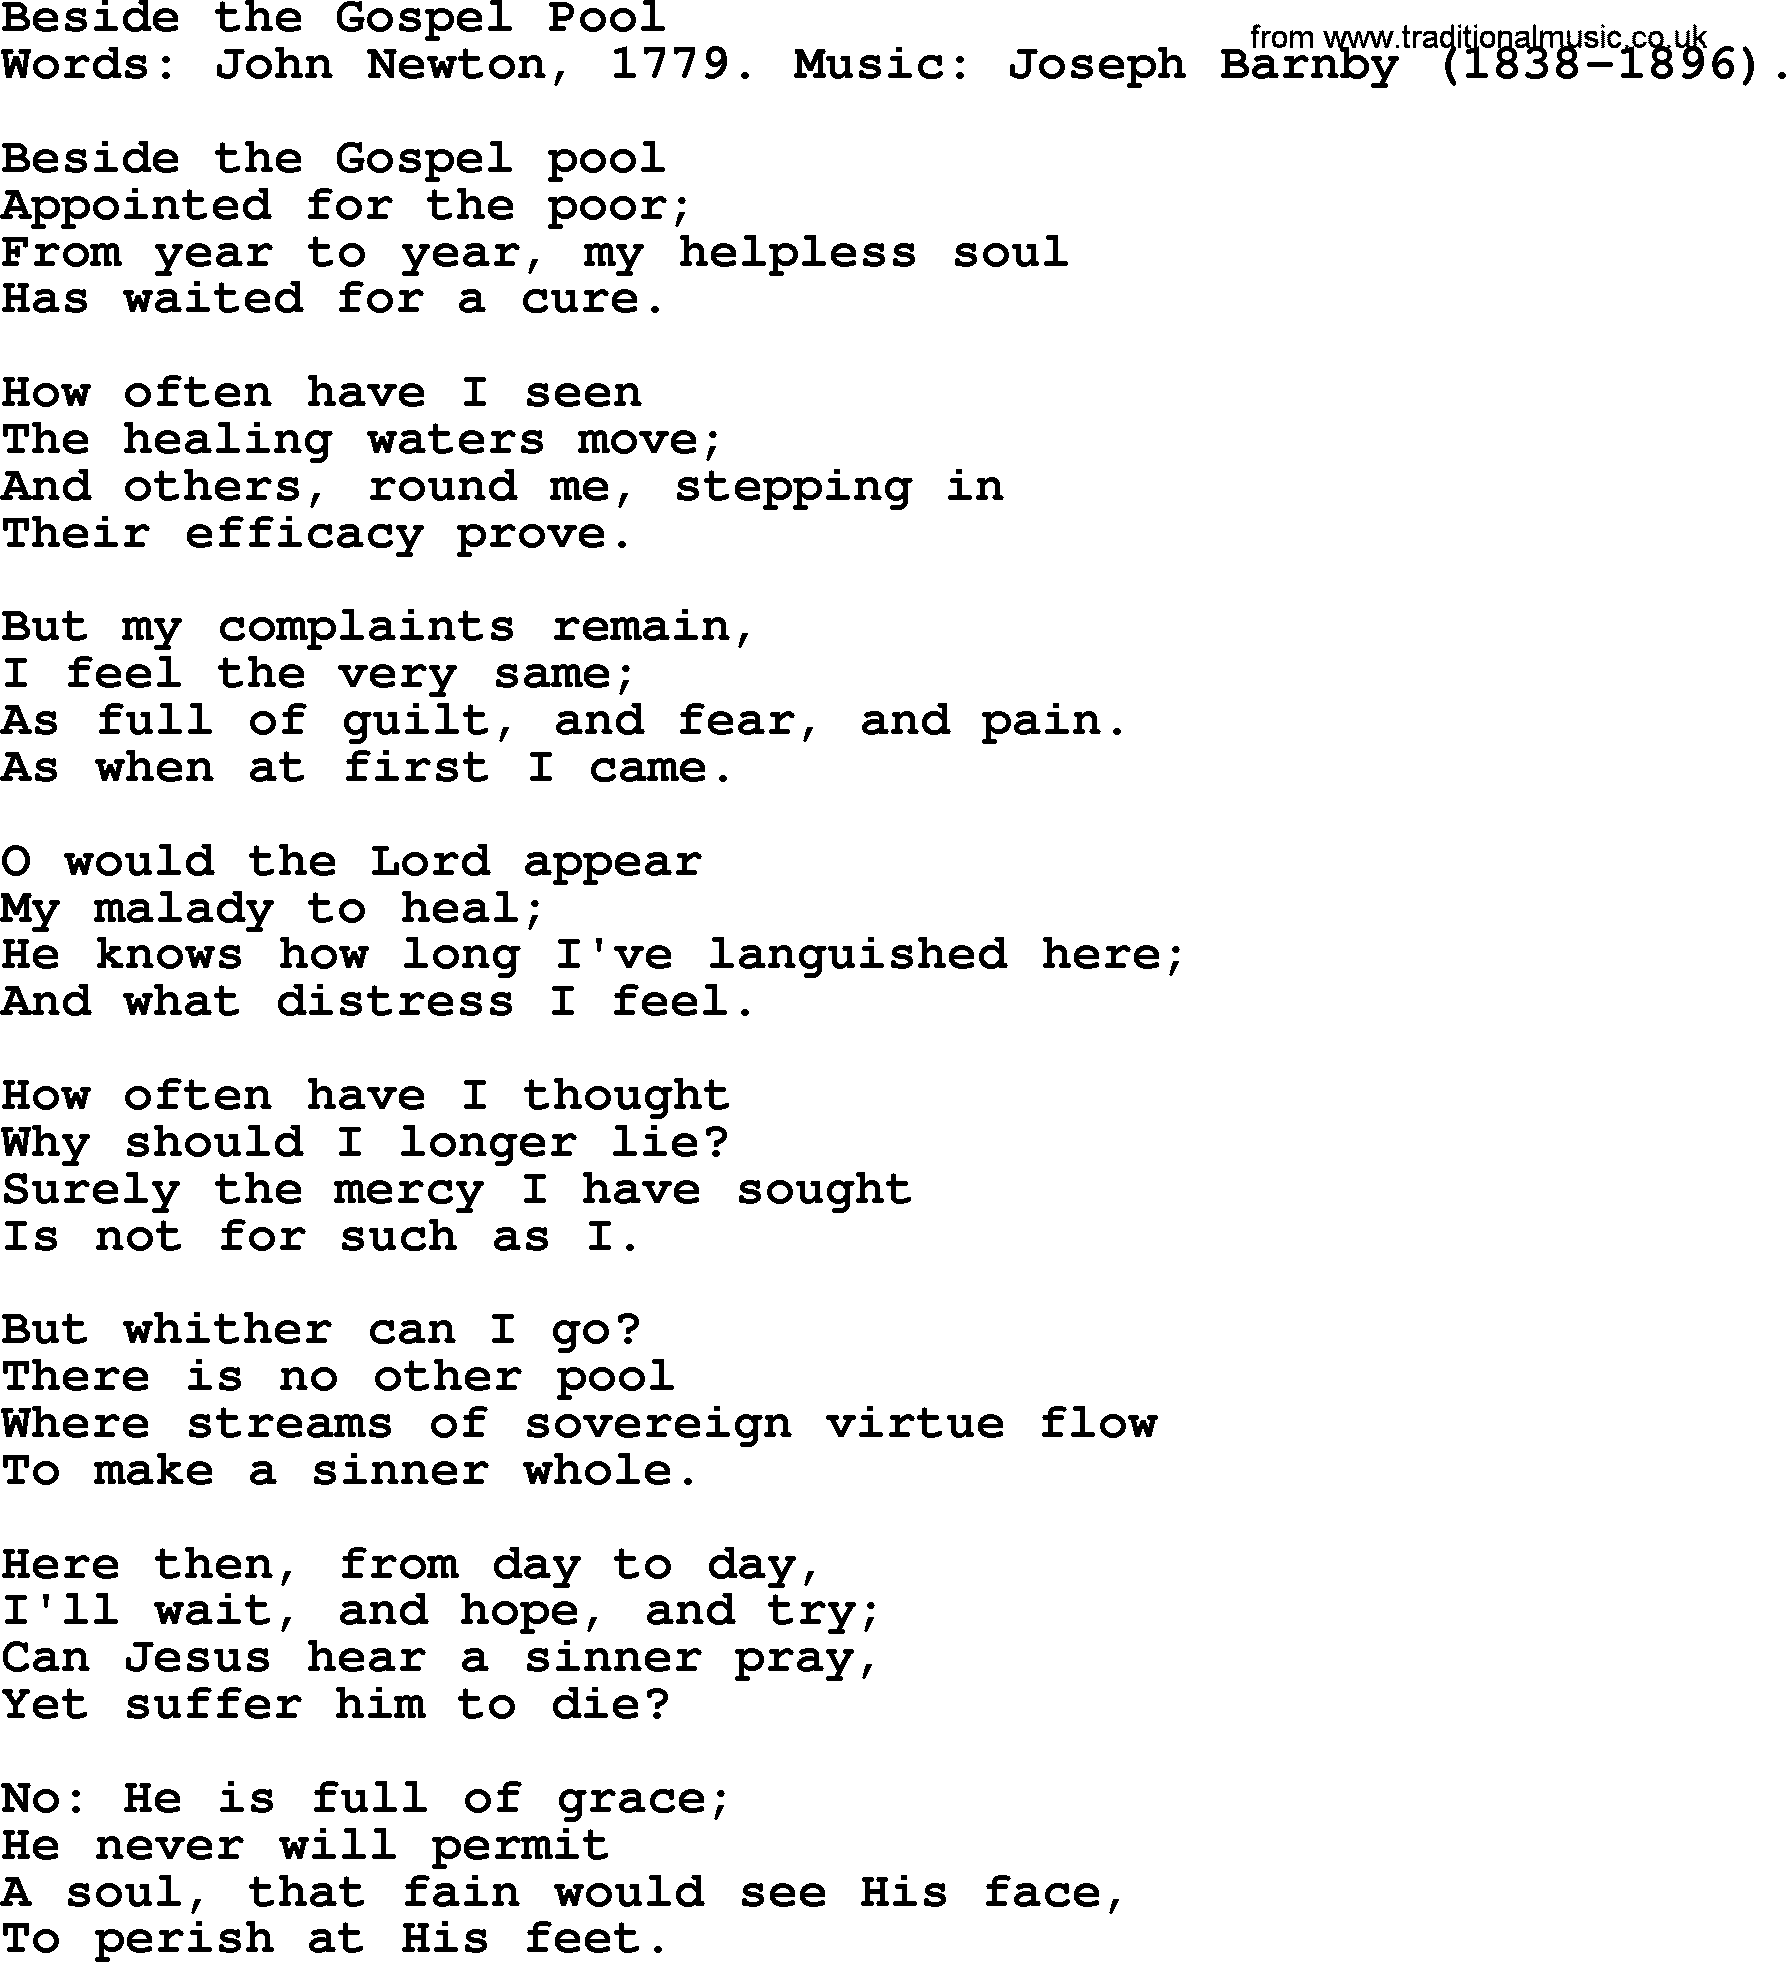 John Newton hymn: Beside The Gospel Pool, lyrics